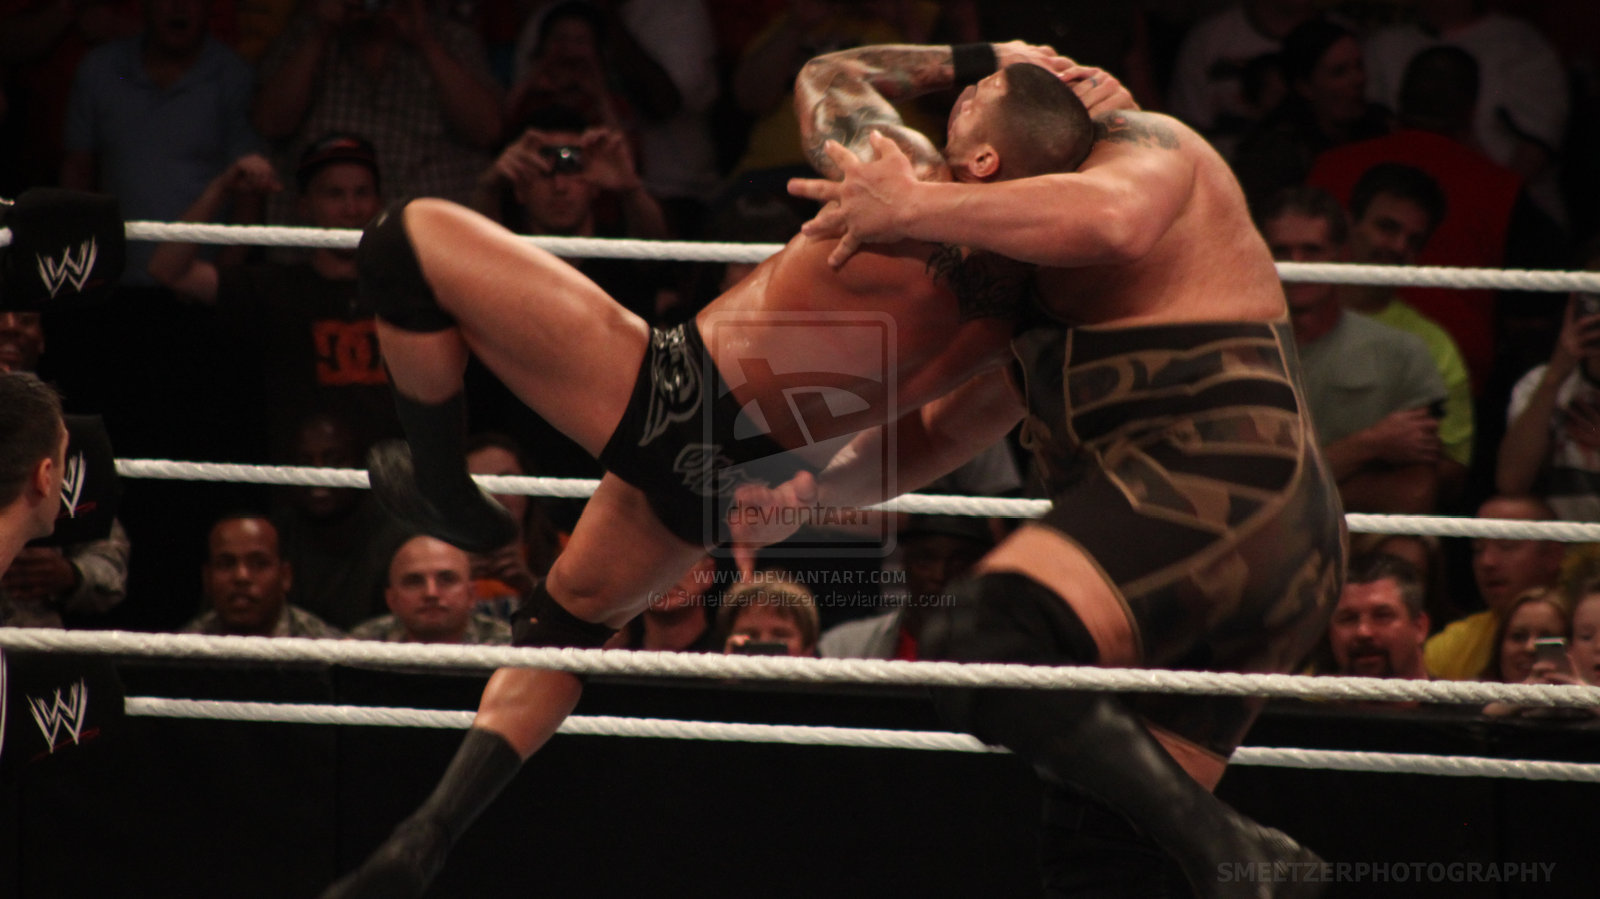 Randy Orton Hitting The Rko On Big Show By Smeltzerdeltzer